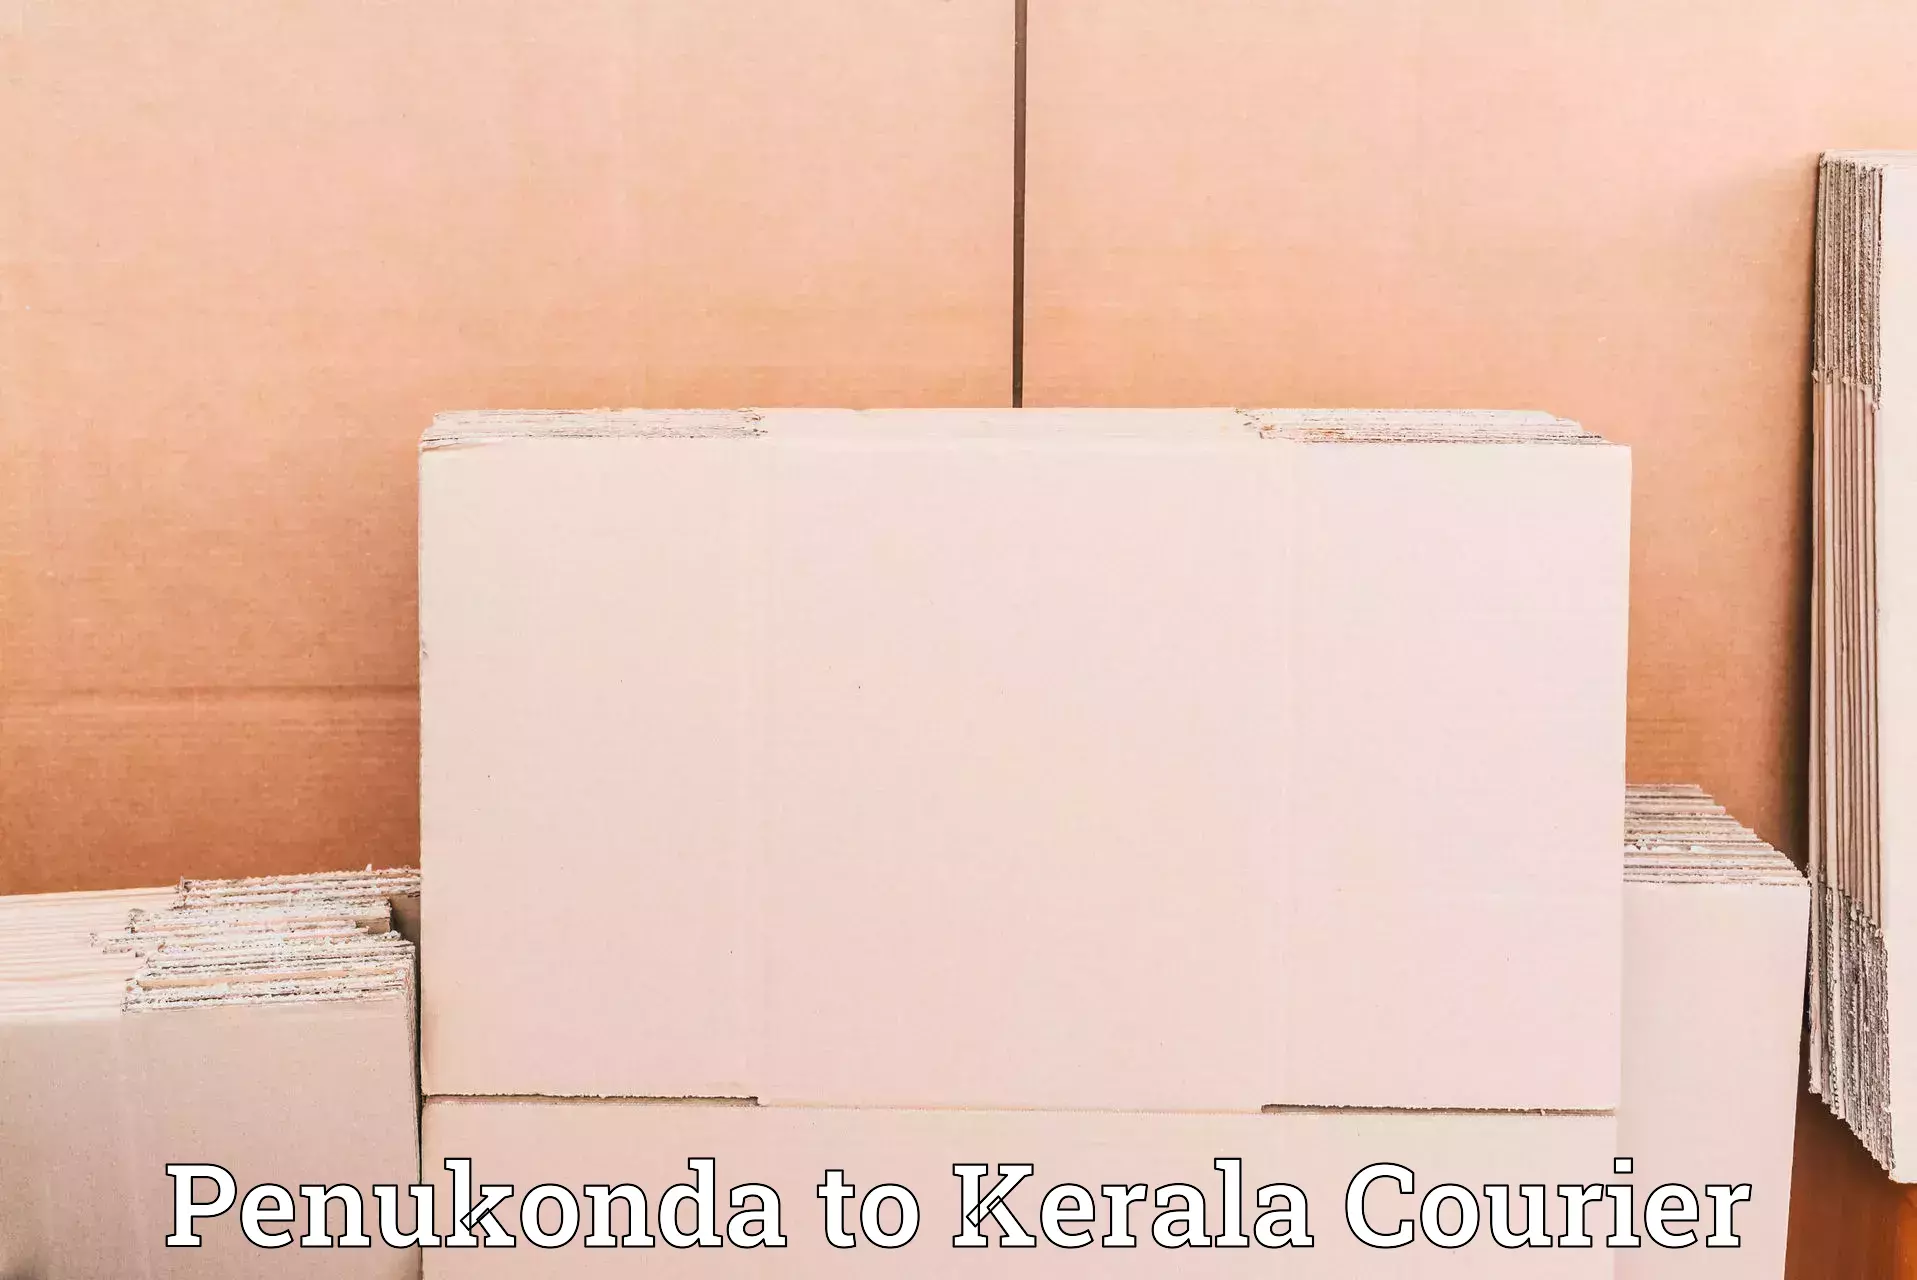 Courier membership in Penukonda to Kattappana